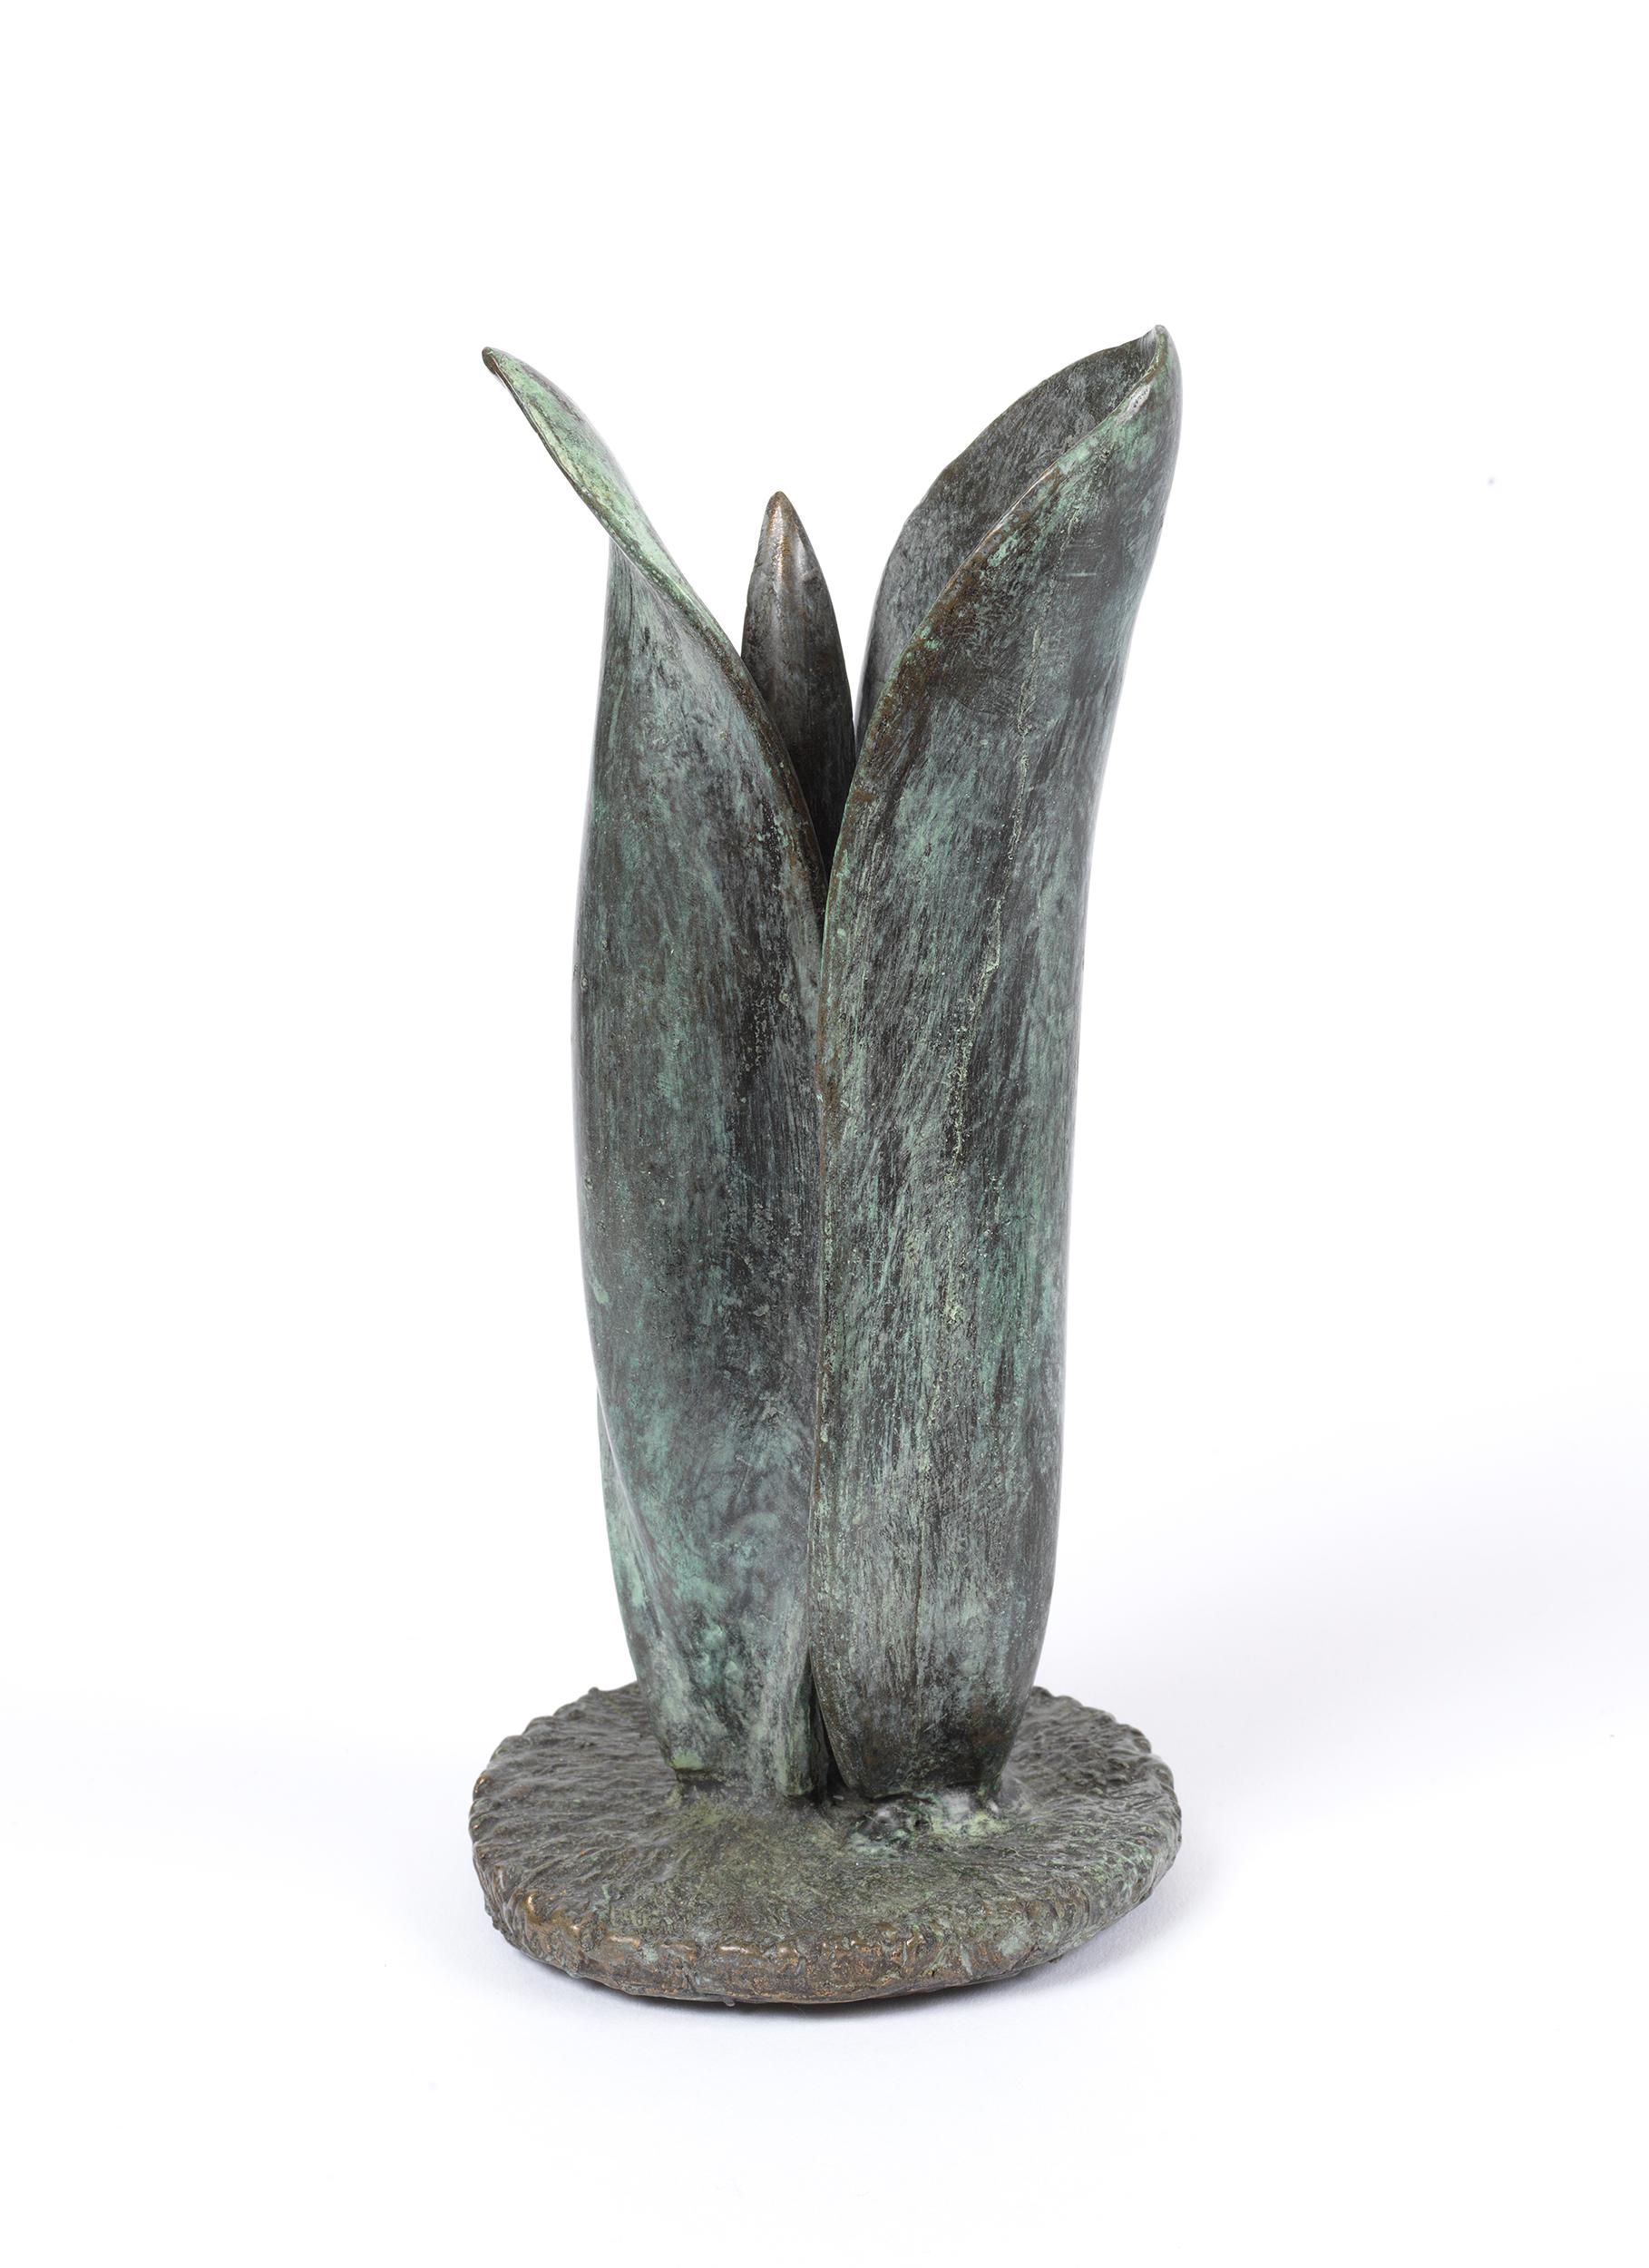 Tulip - bronze sculpture of emerging spring tulip - Sculpture by Sylvia Beckman